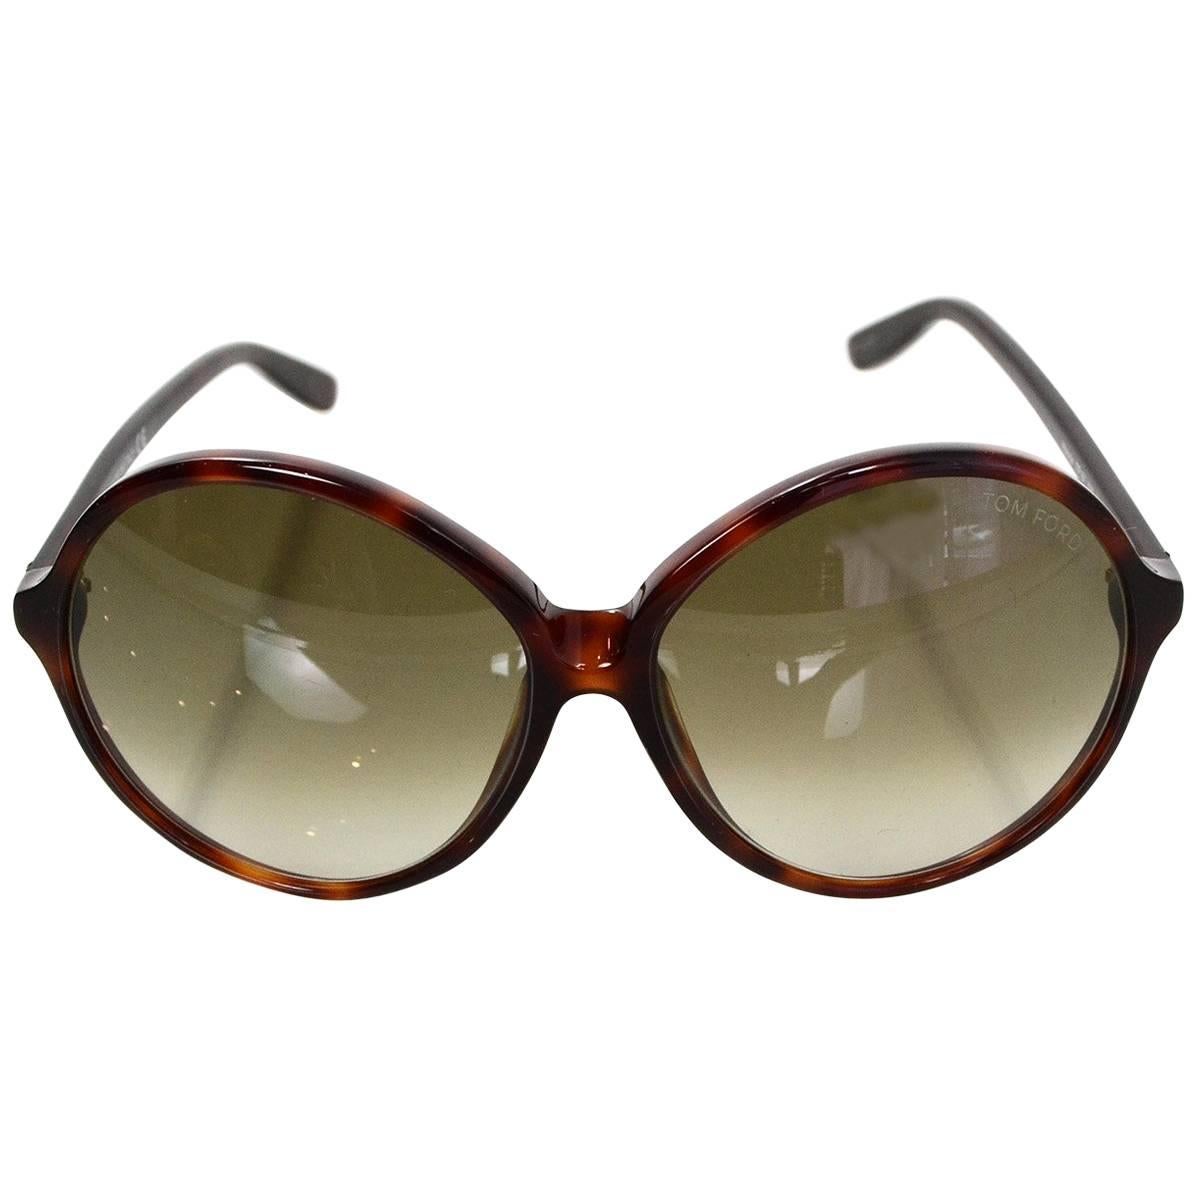 Tom Ford Tortoise Rhonda Round Frame Sunglasses with Case